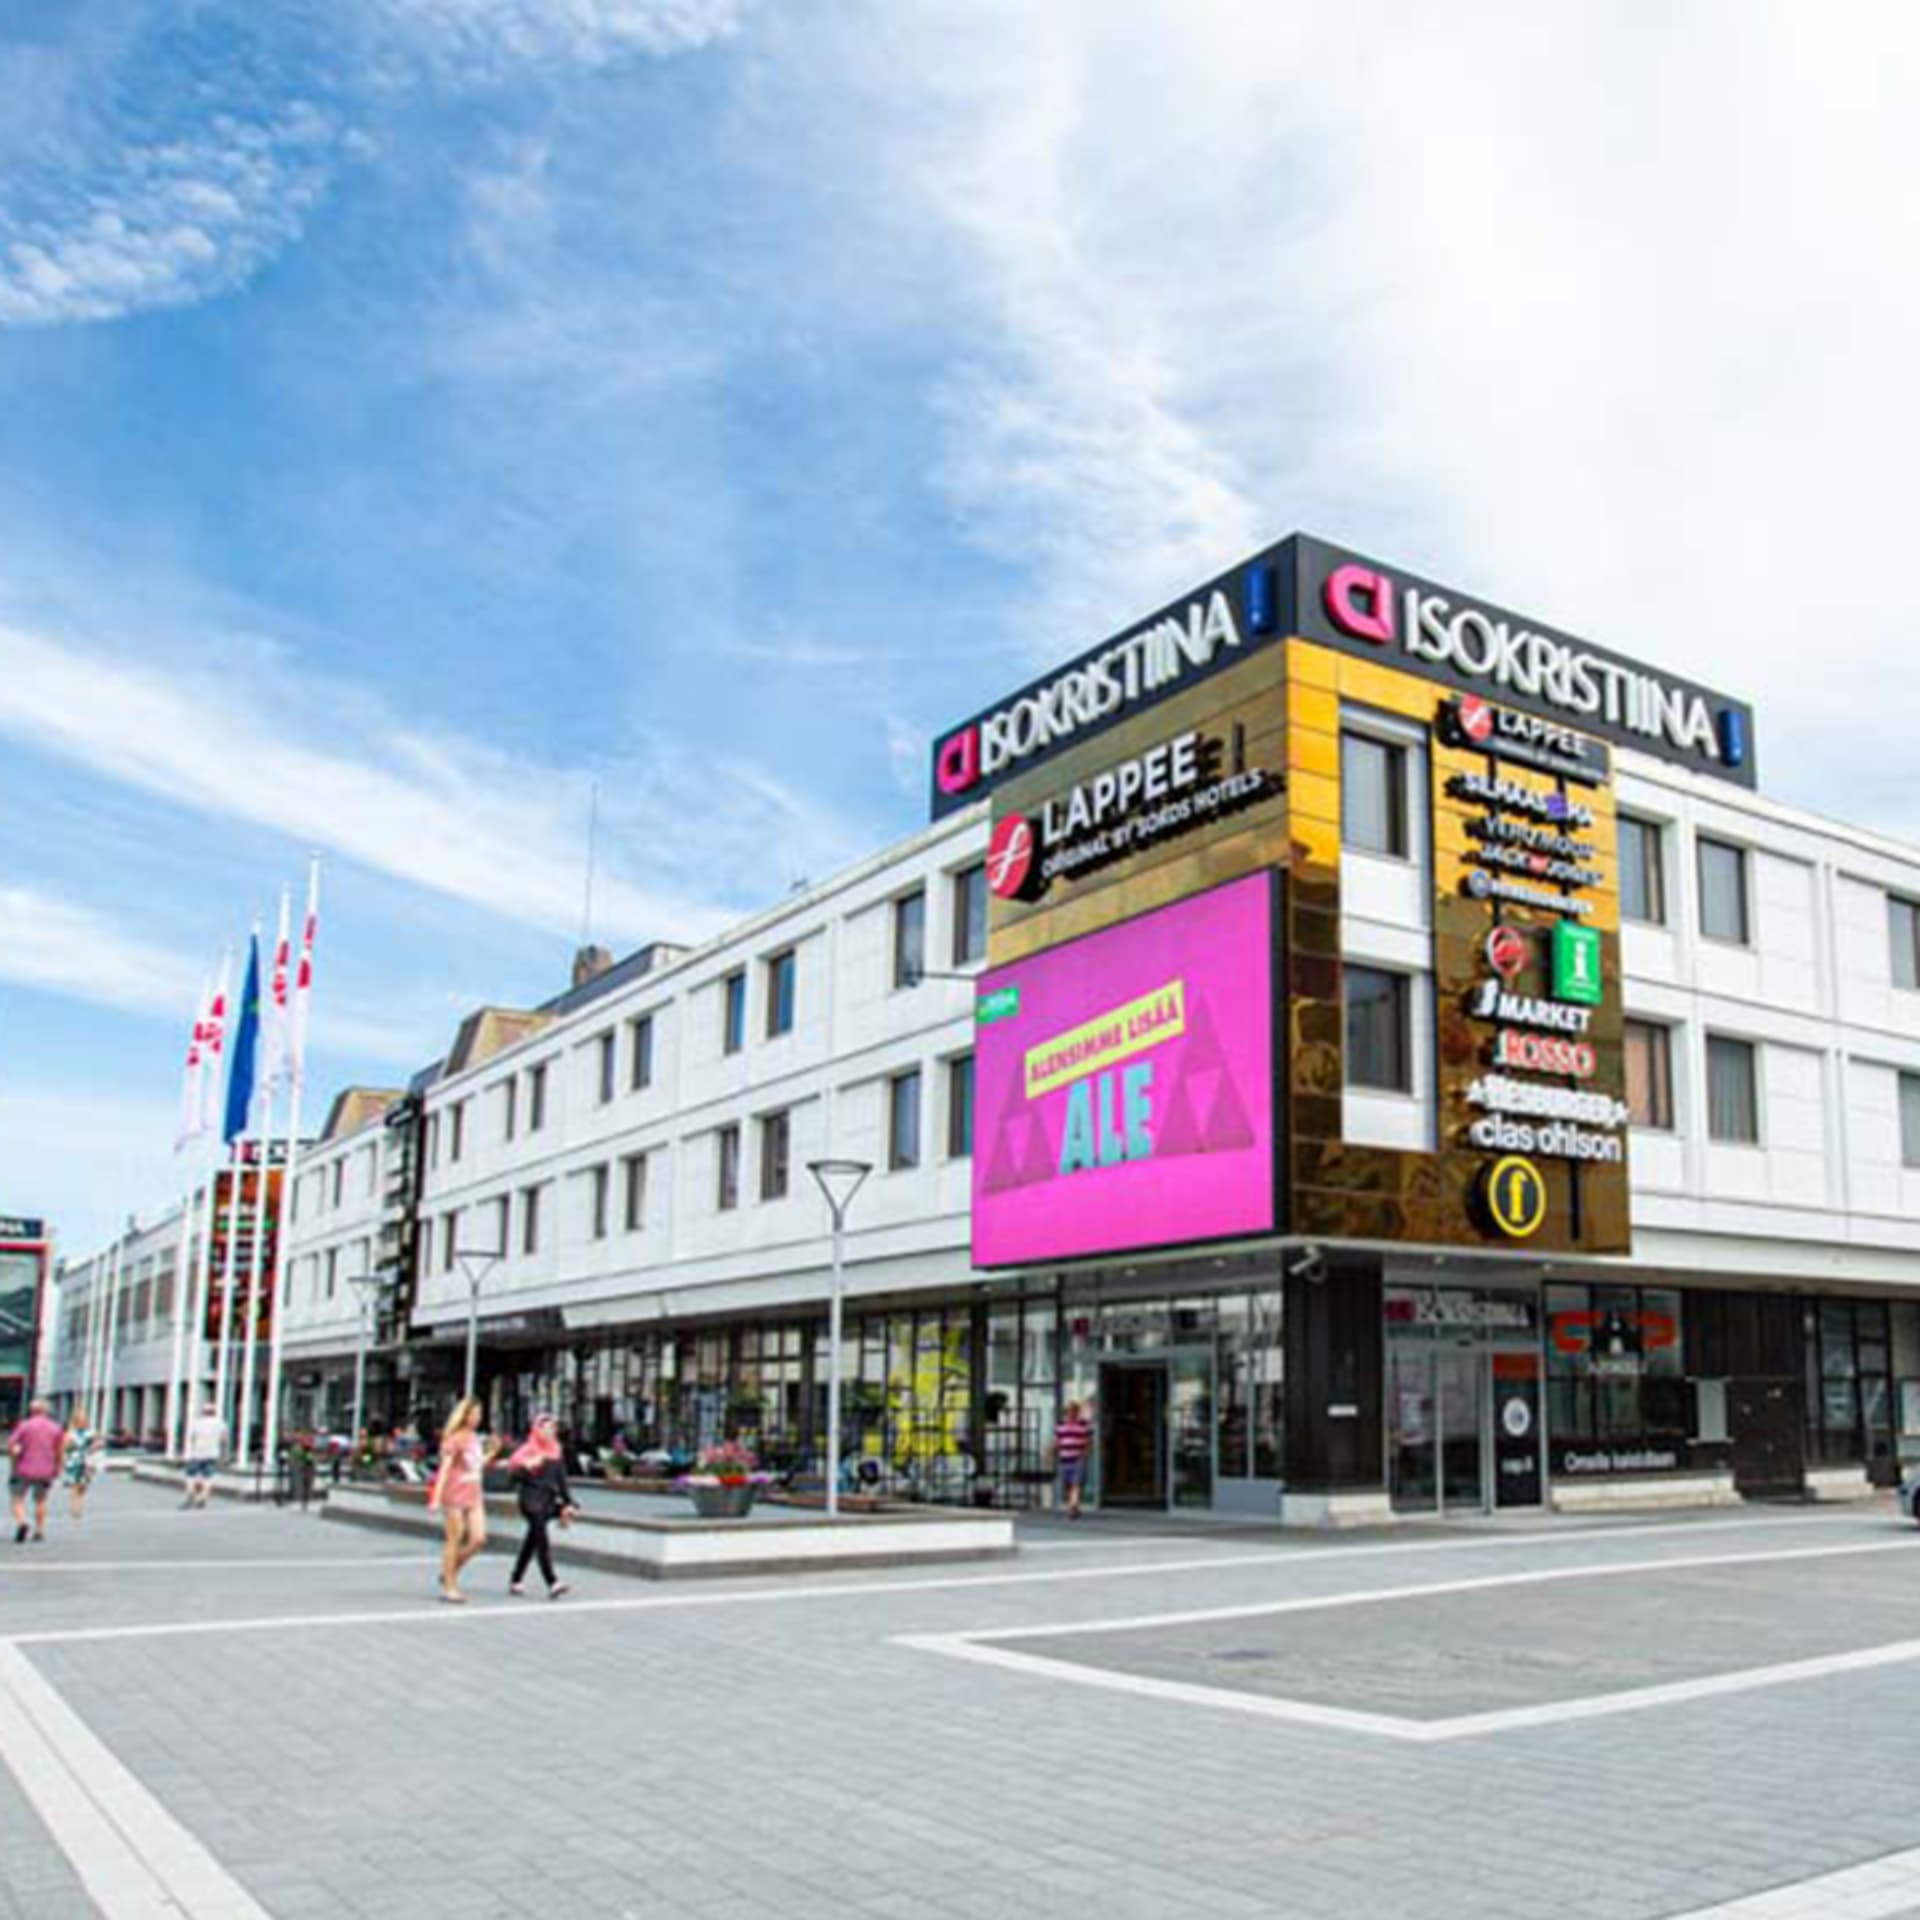 Original Sokos Hotel Lappee is part of shopping centre IsoKristiina